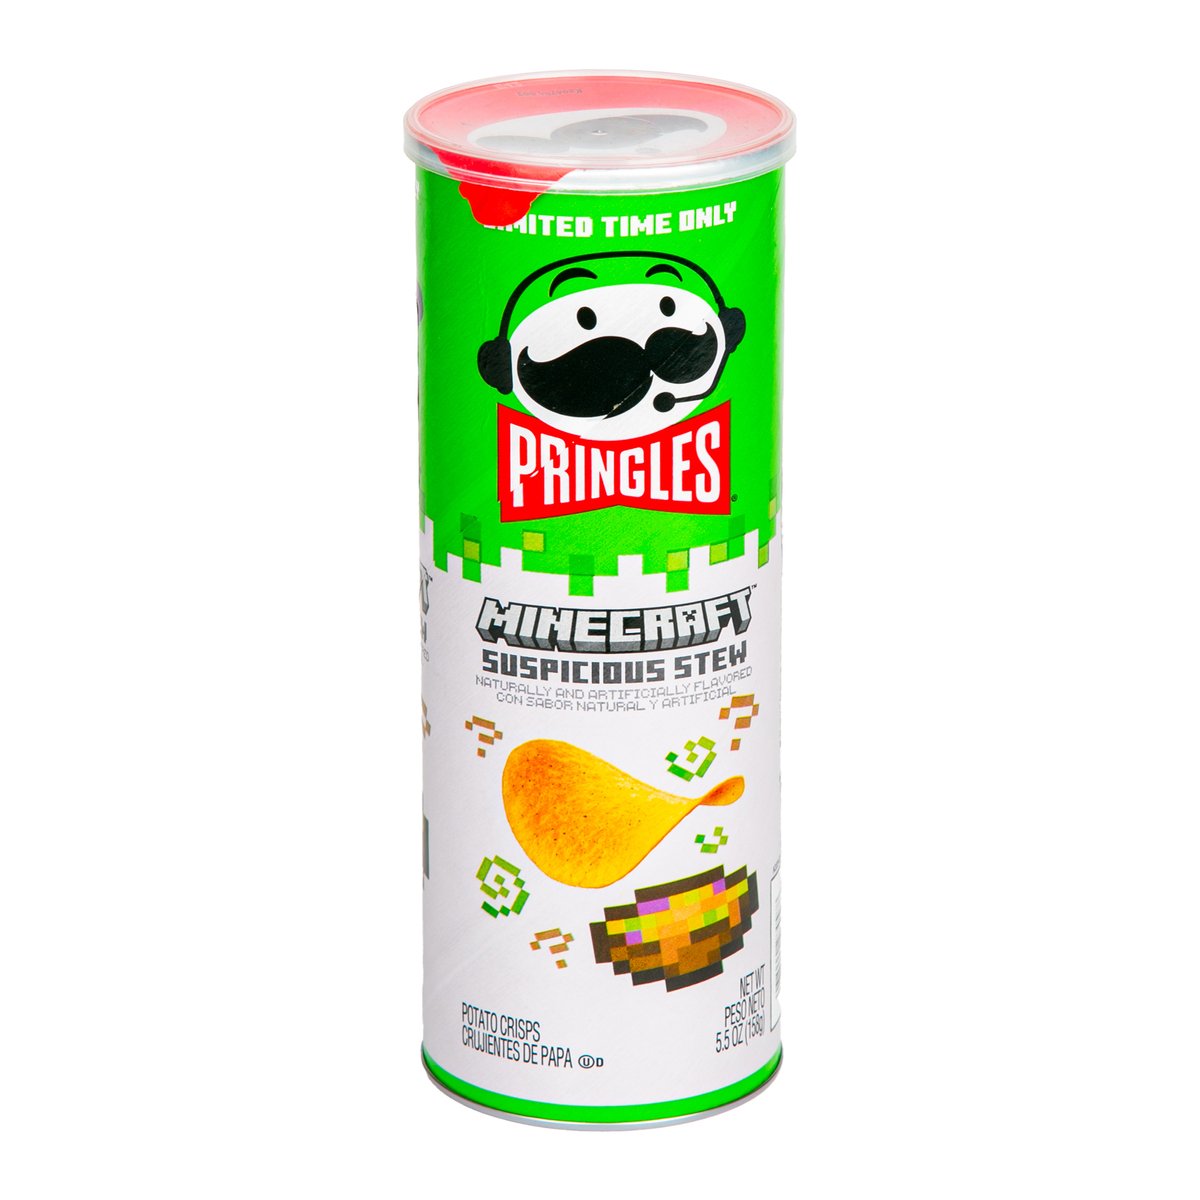 Pringles Potato Chips Minecraft Suspicious Stew 158 g